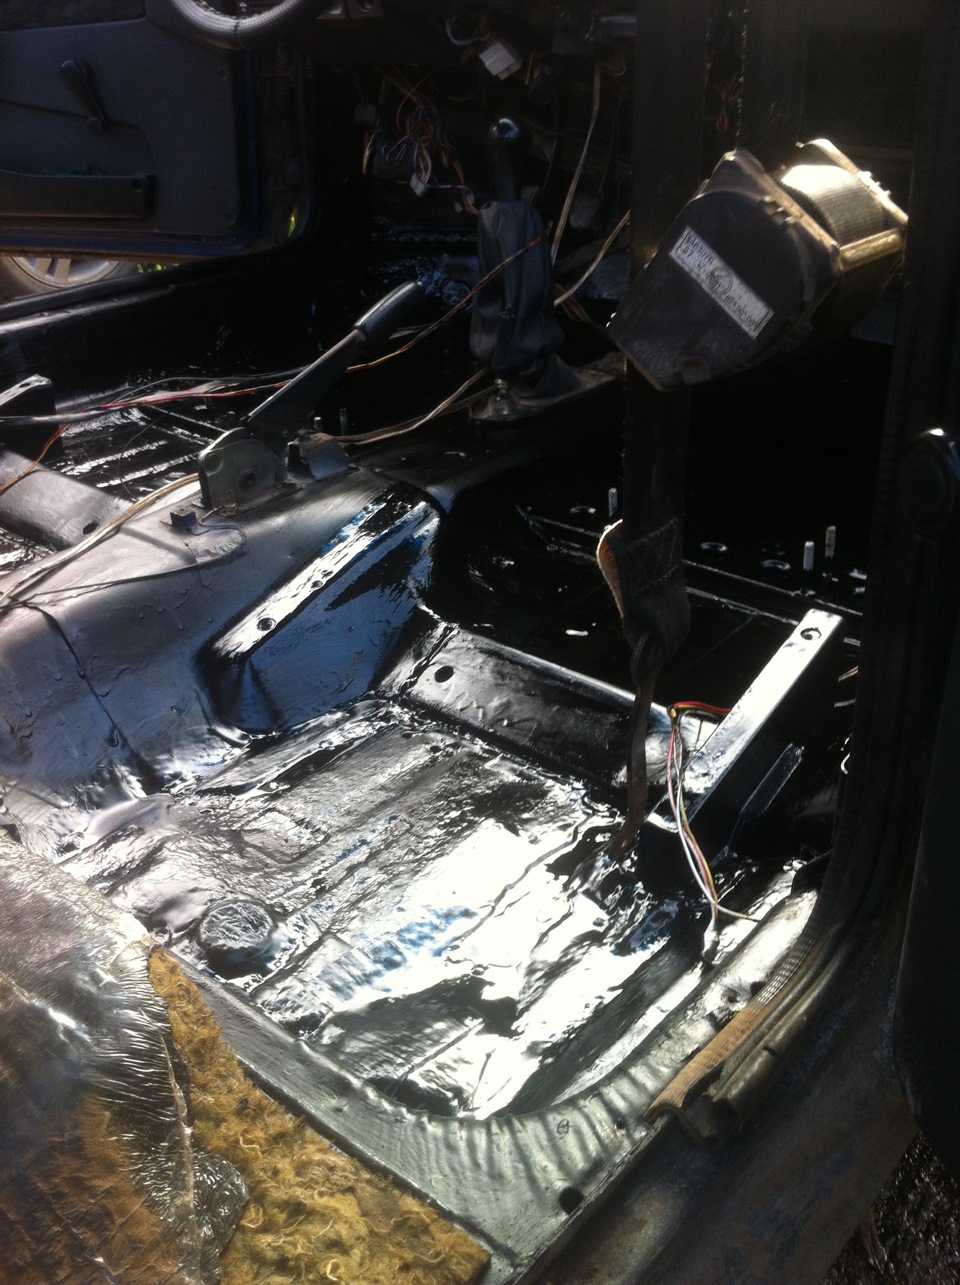  Кордон. — Lada 21093i, 1,5 л, 2002 года | кузовной ремонт | DRIVE2